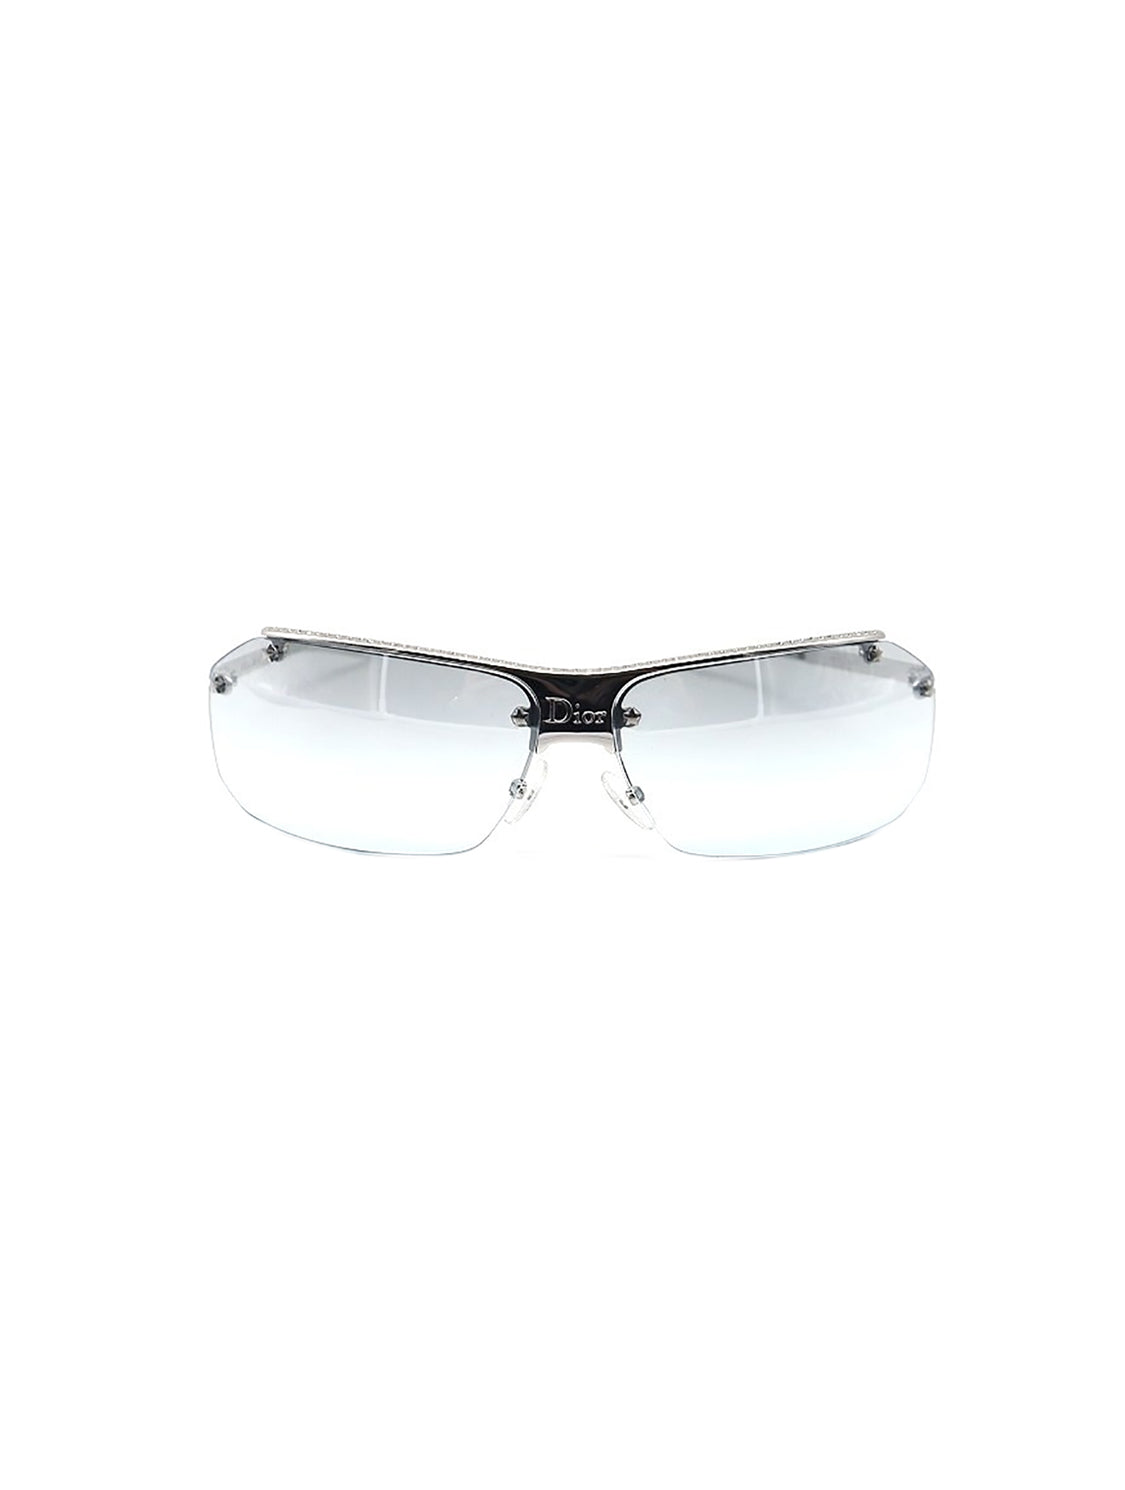 Christian Dior 2000s Silver Frameless Sunglasses